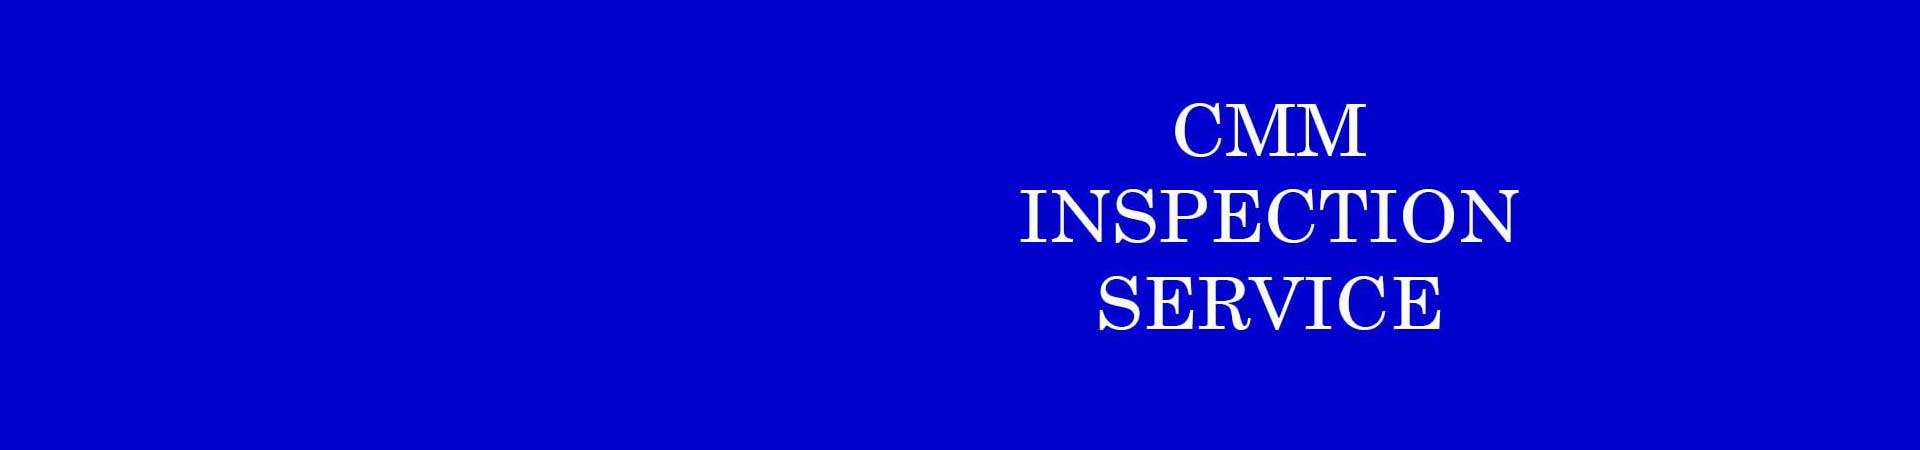 haviss cmm inspection services